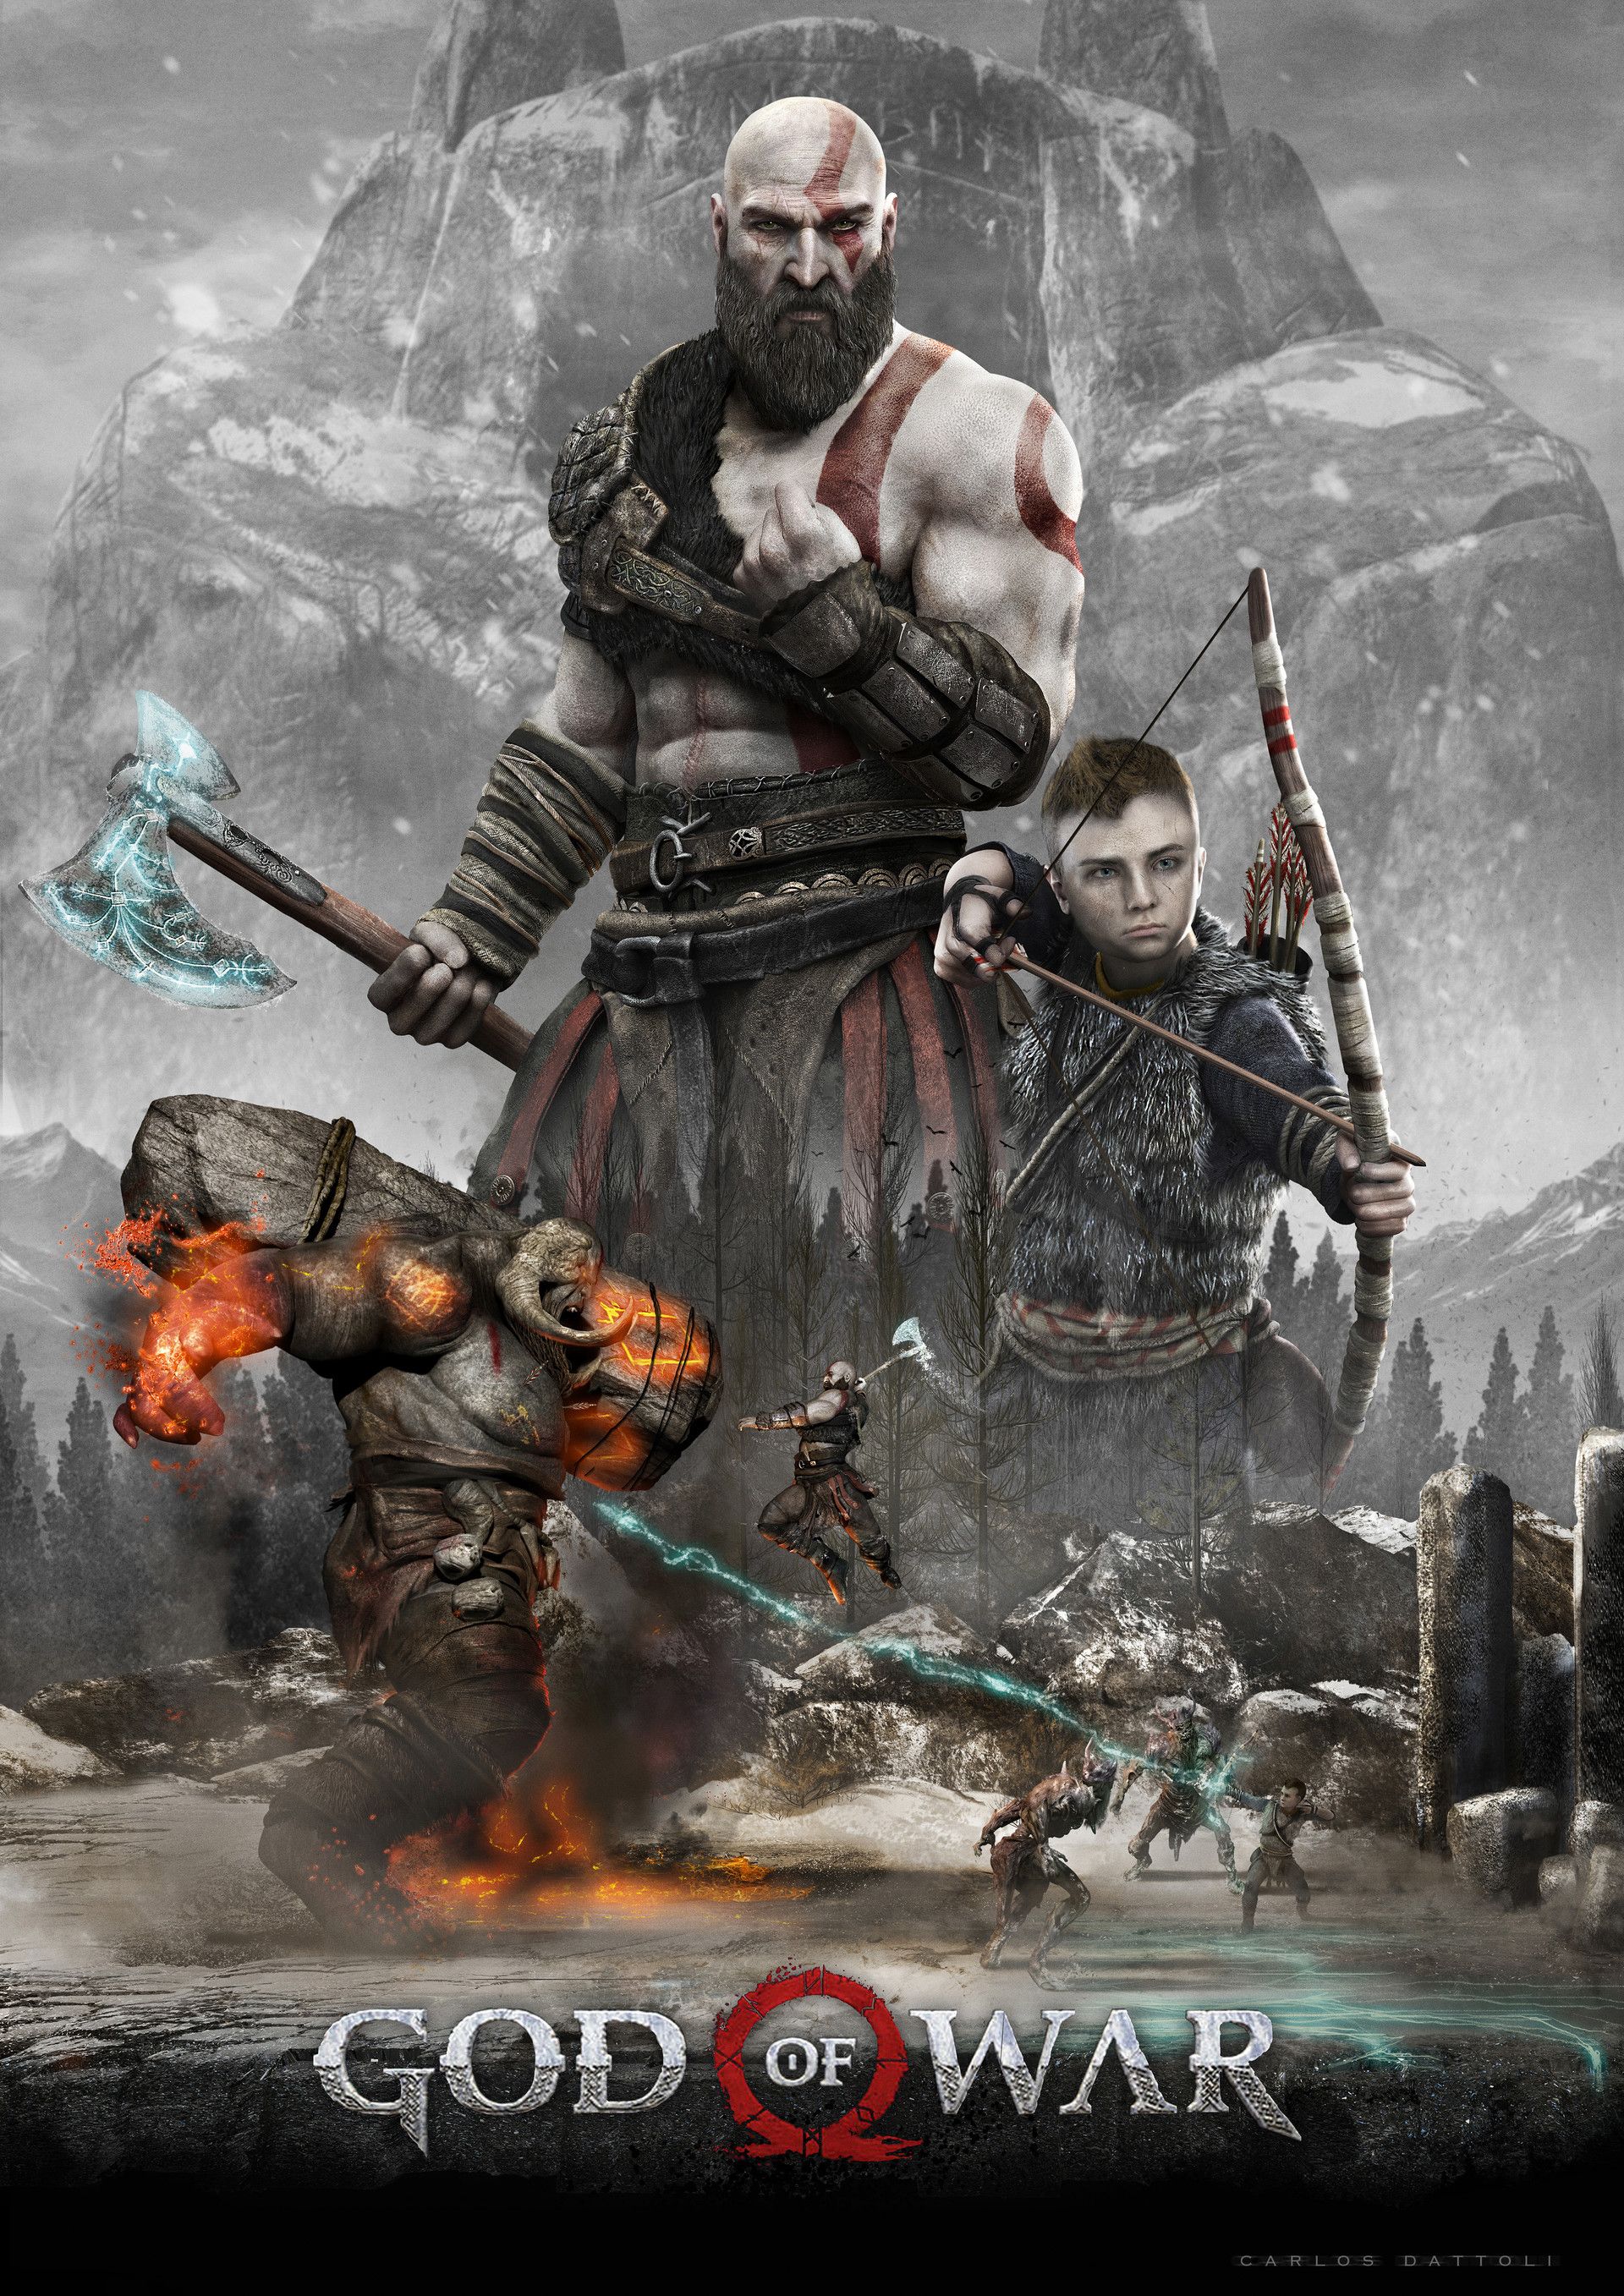 God of War 4 Poster Wallpaper: Kratos in Combat For Tech